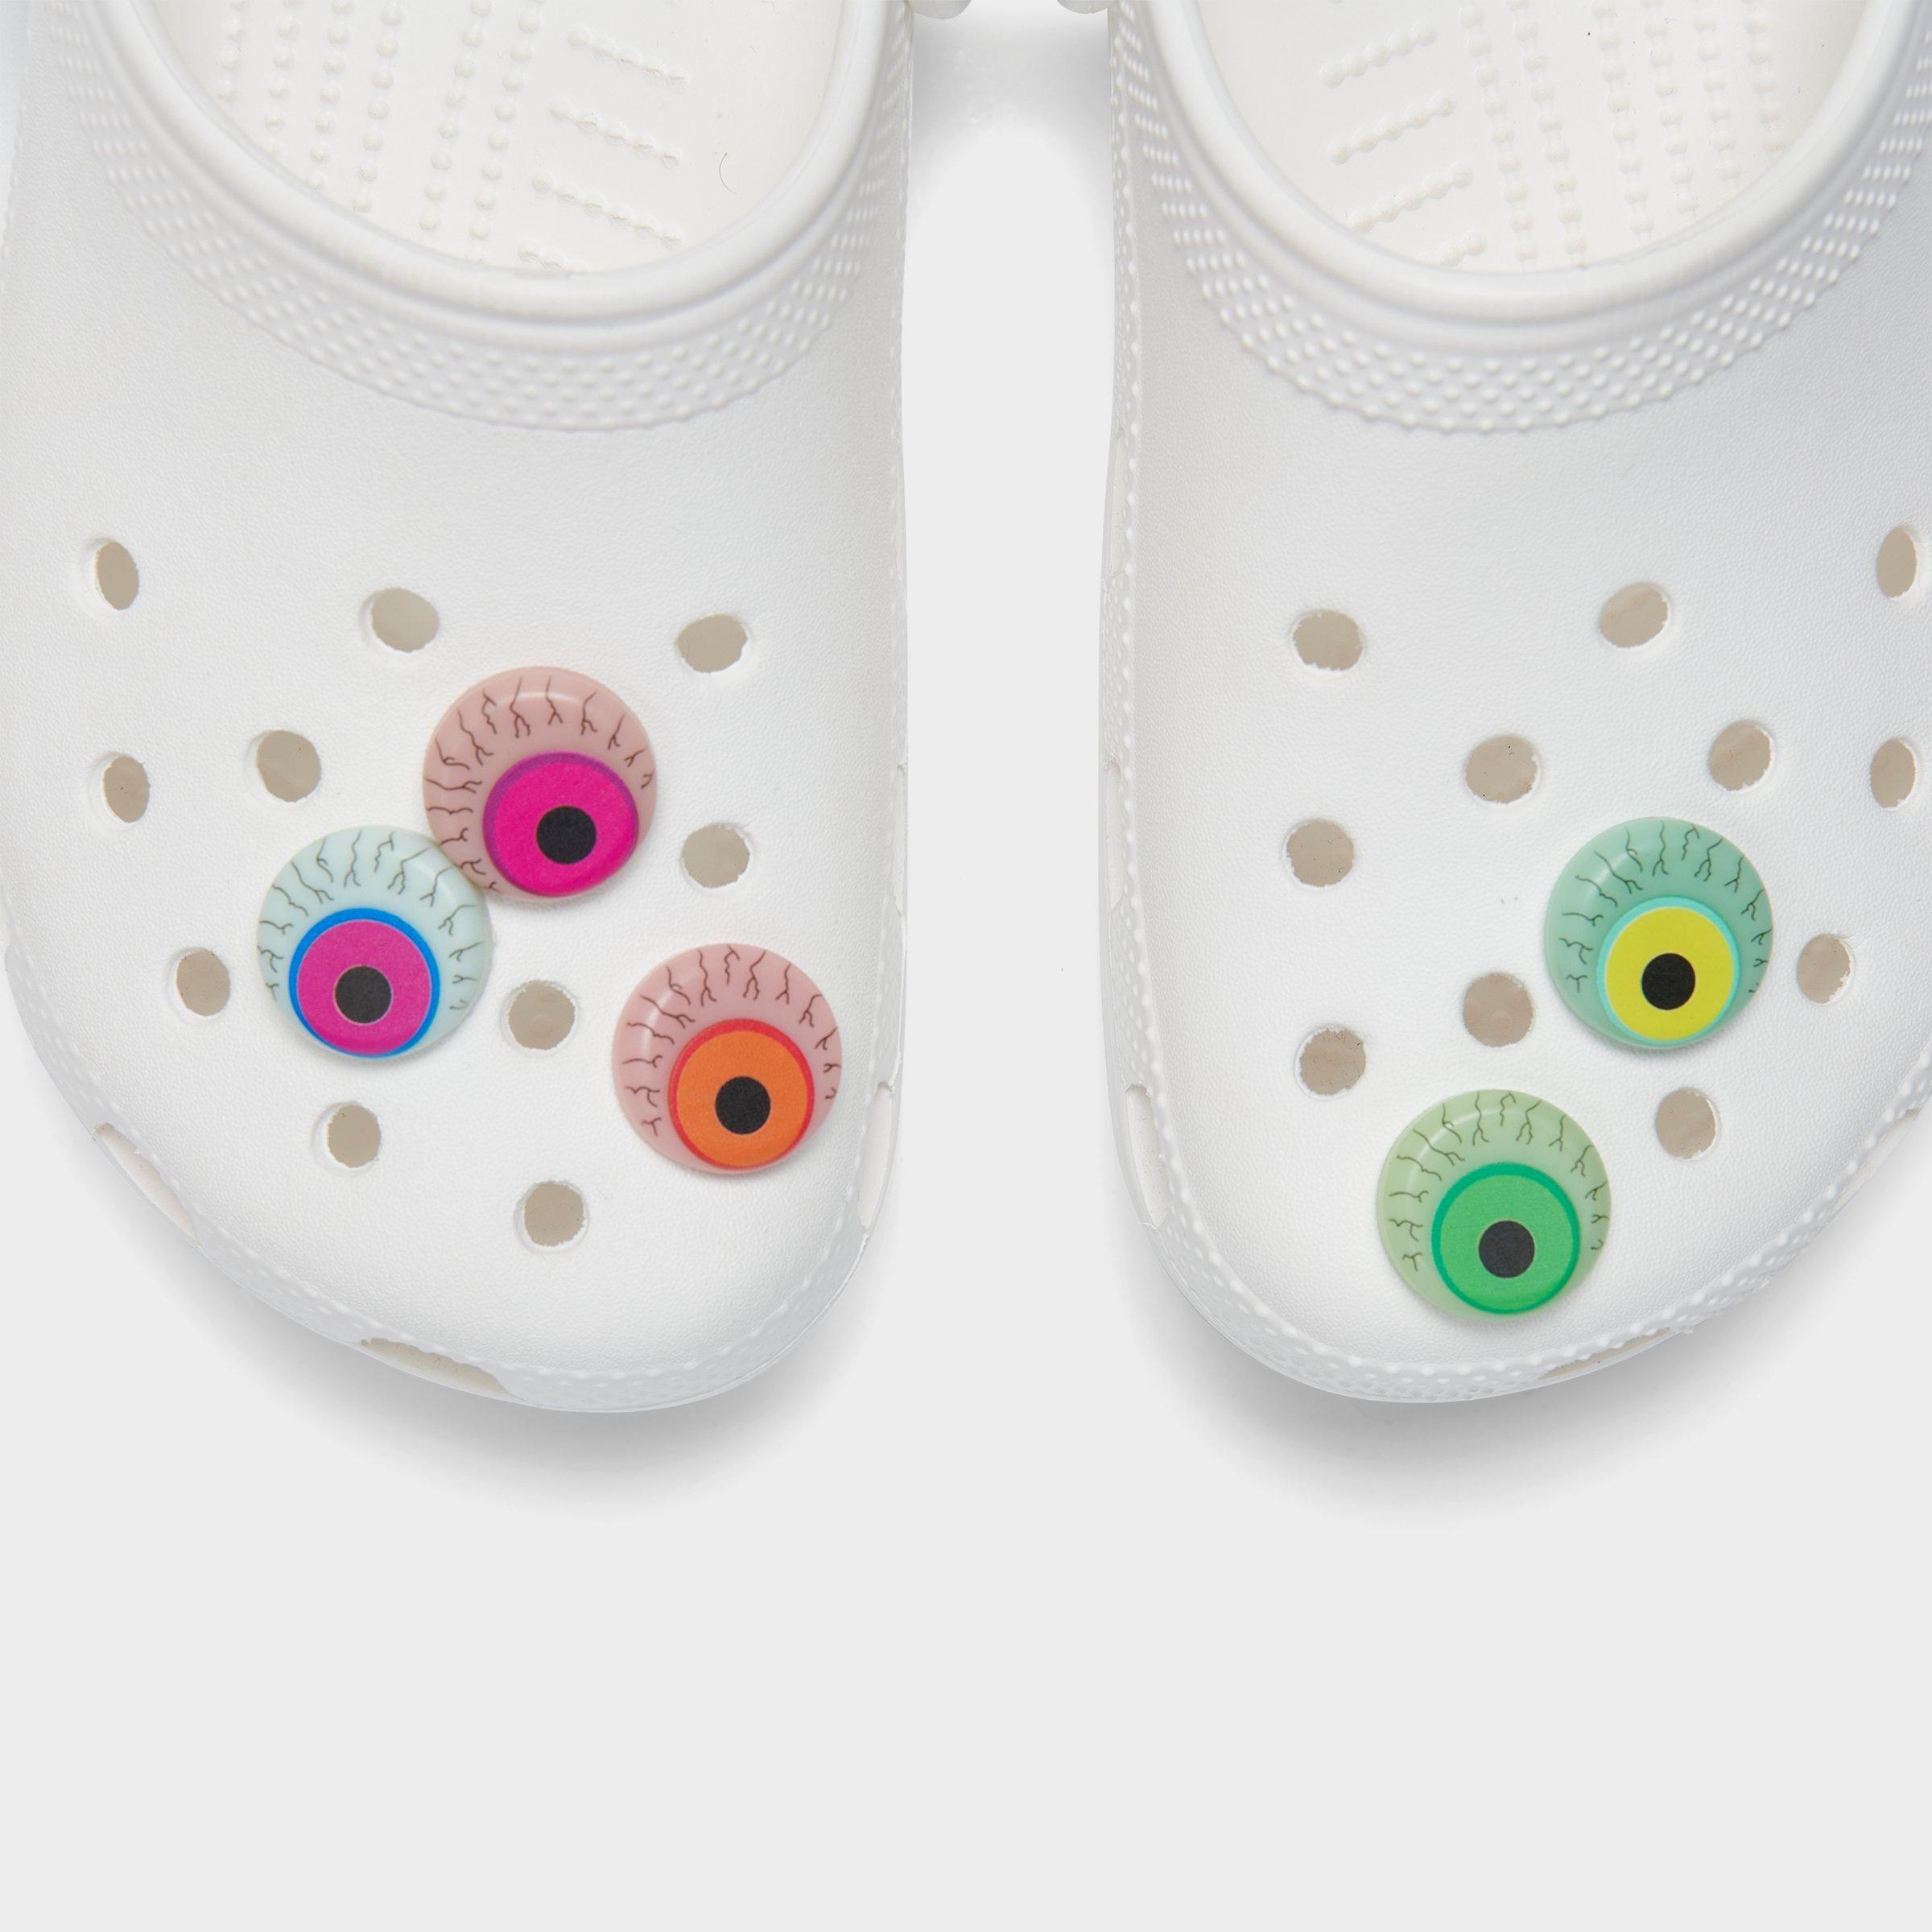 Kids' Crocs Jibbitz, Shoe Charms for Crocs